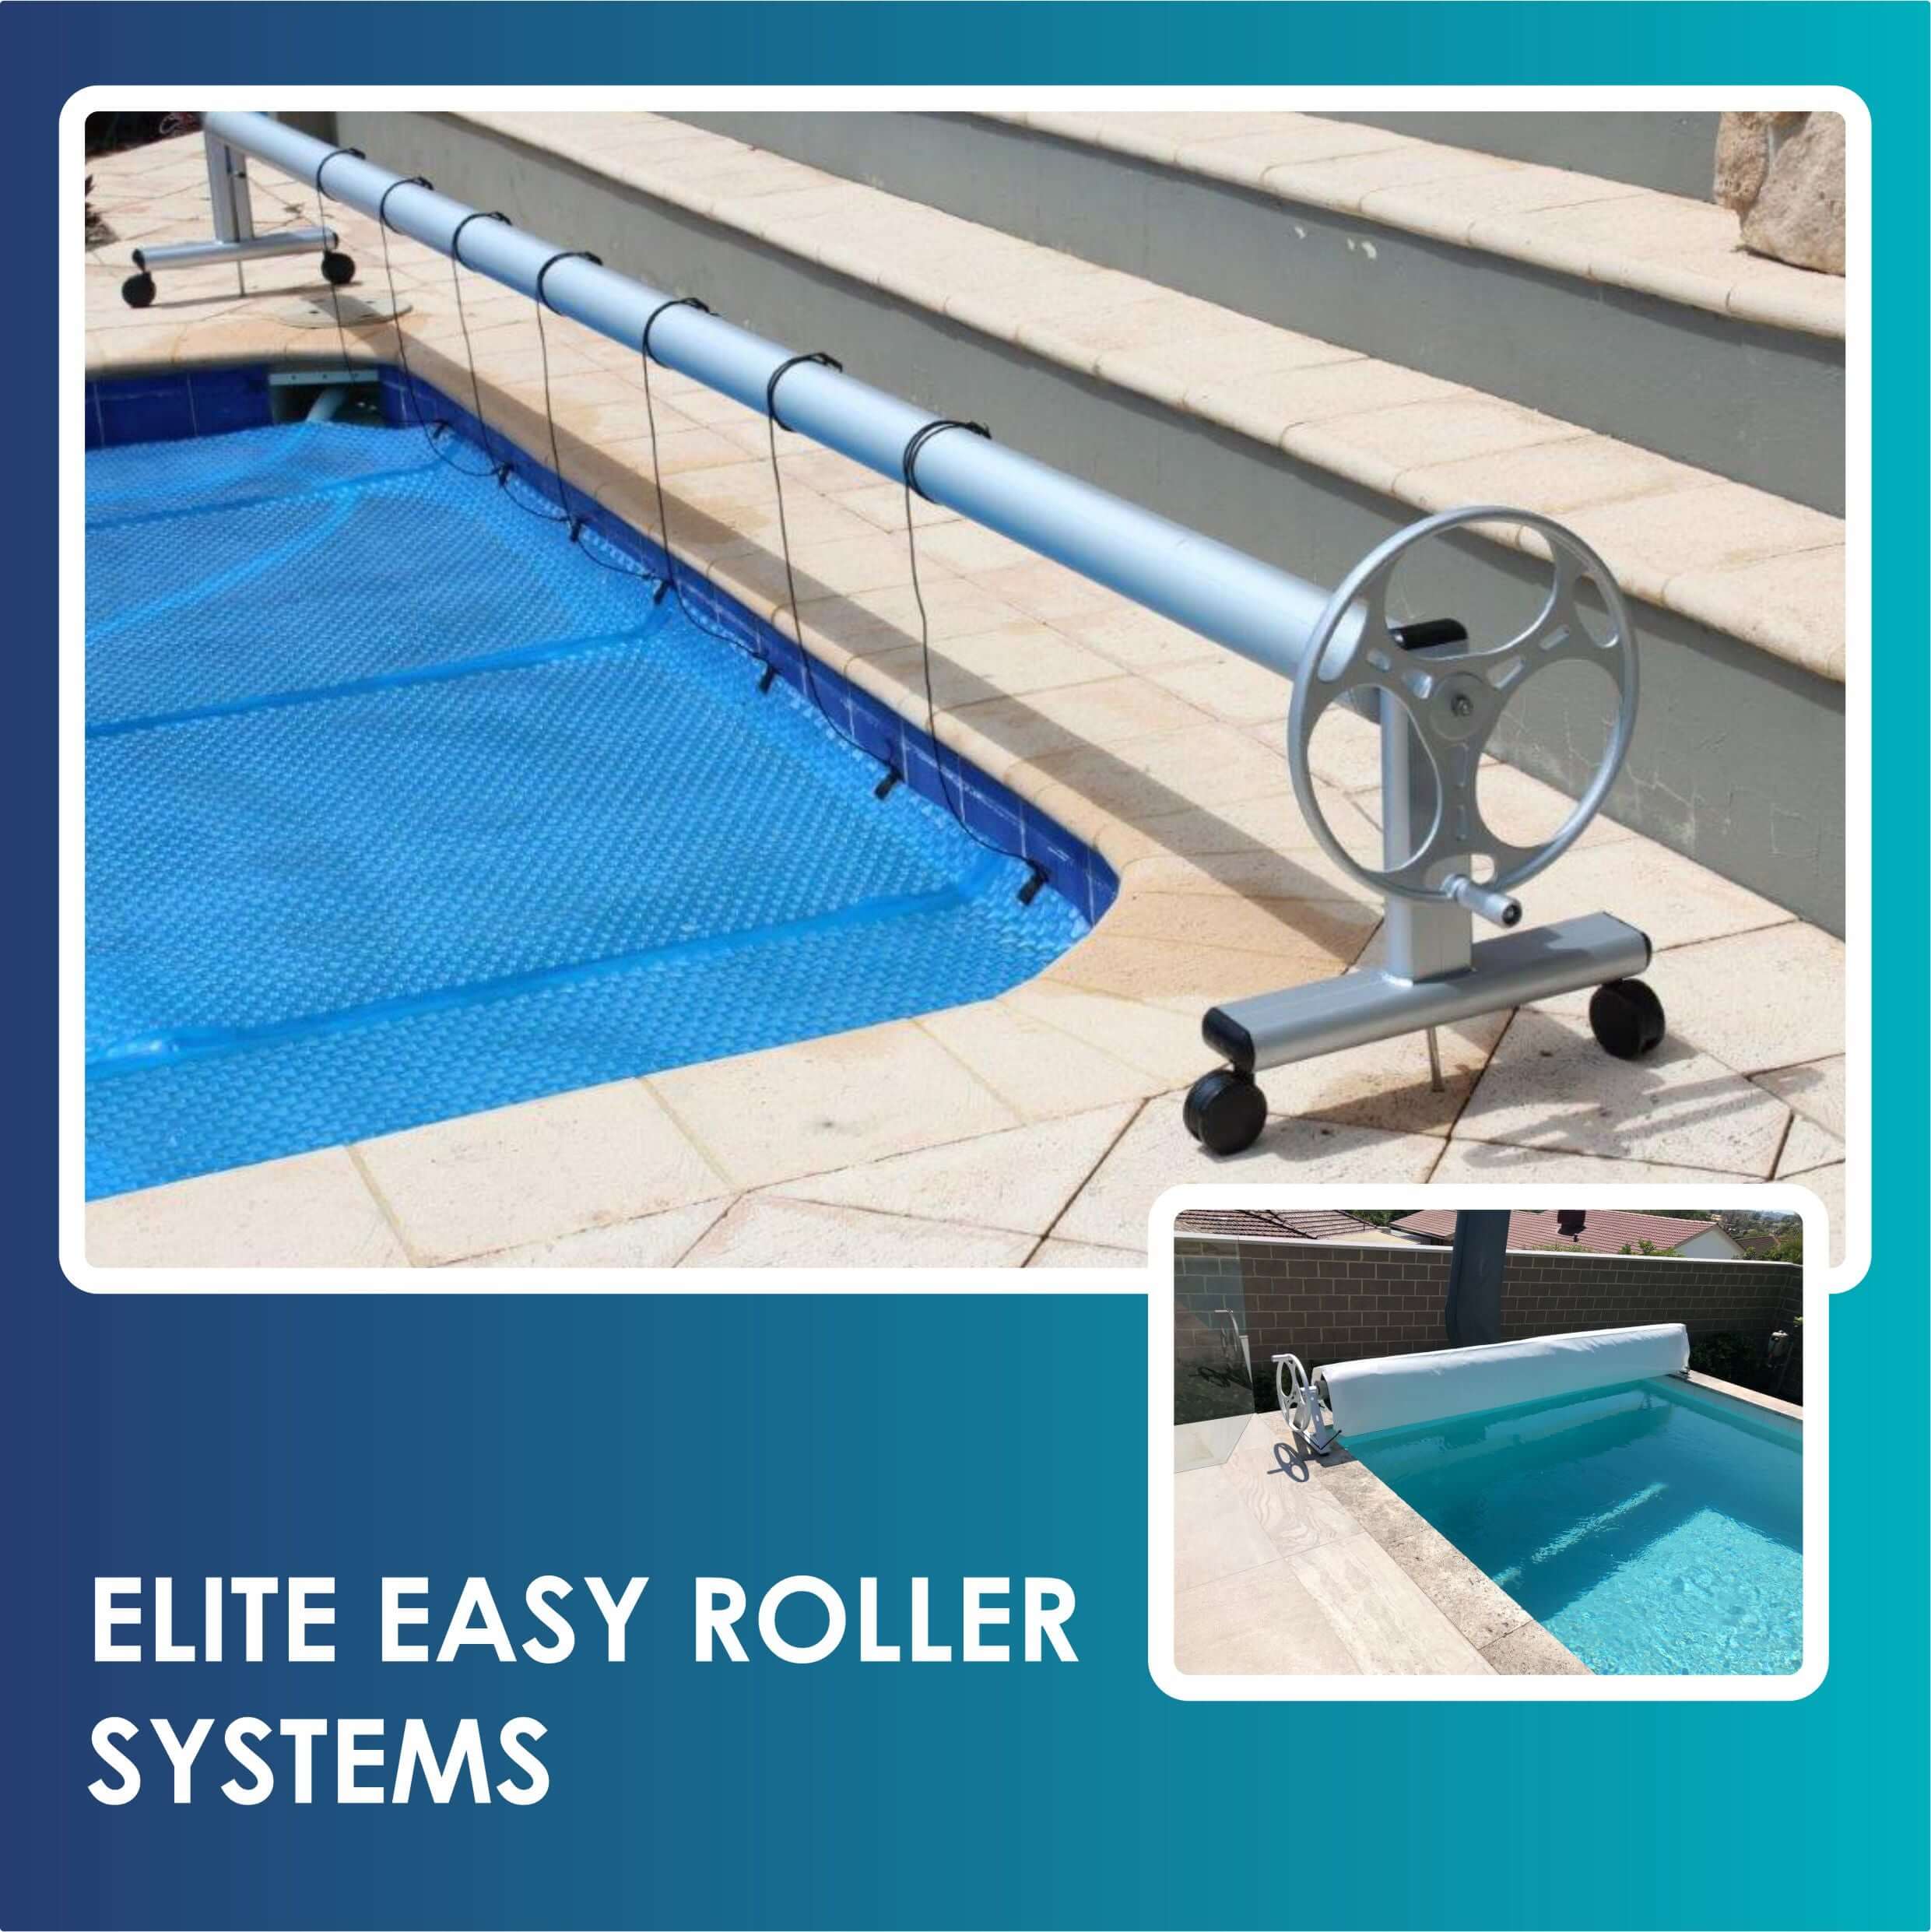 Elite Pool Covers - Quality Australian Made Pool Covers